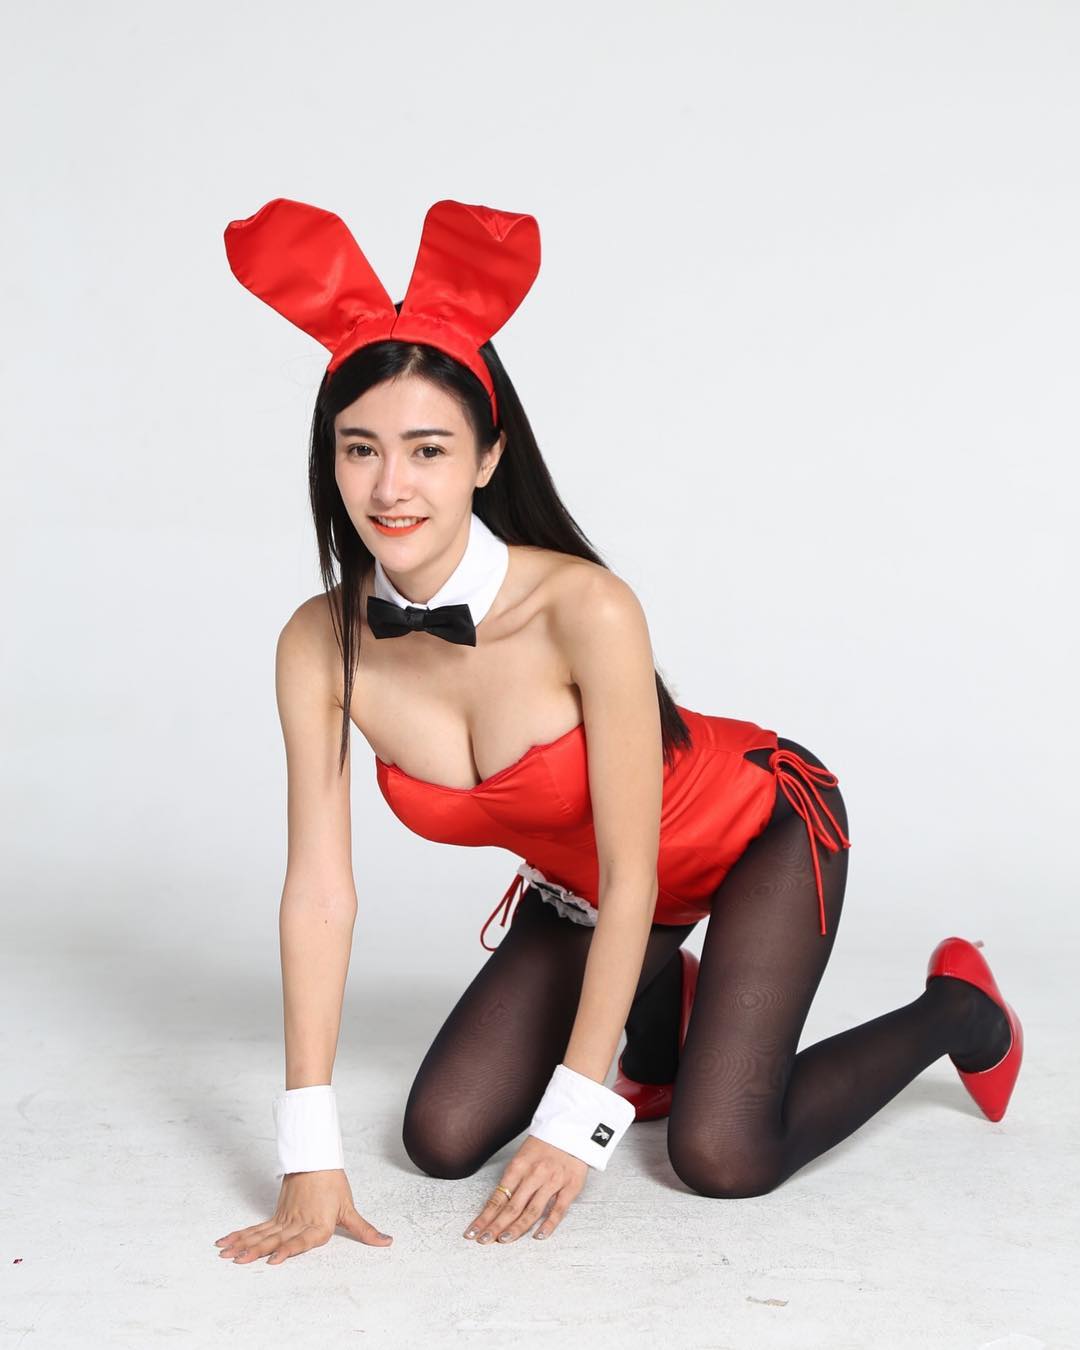 Mutmai Onkanya Pakpean - Beautiful Playboy Bunny Thailand - Exotic Asian.